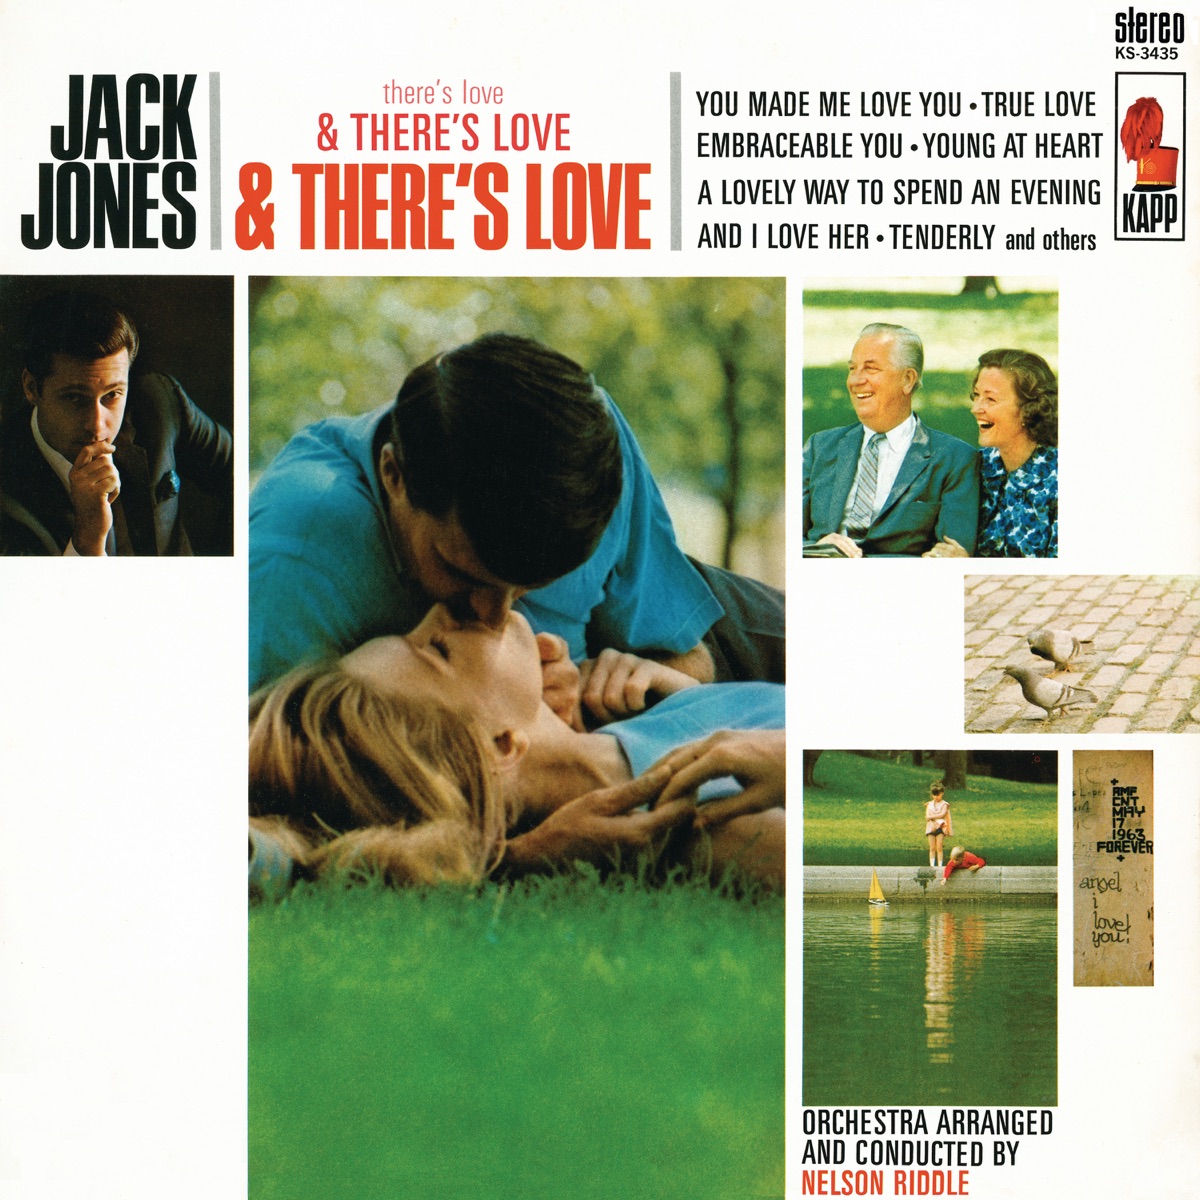 Jack Jones Greatest Hits Full Album  Best Of Jack Jones Songs 2020 